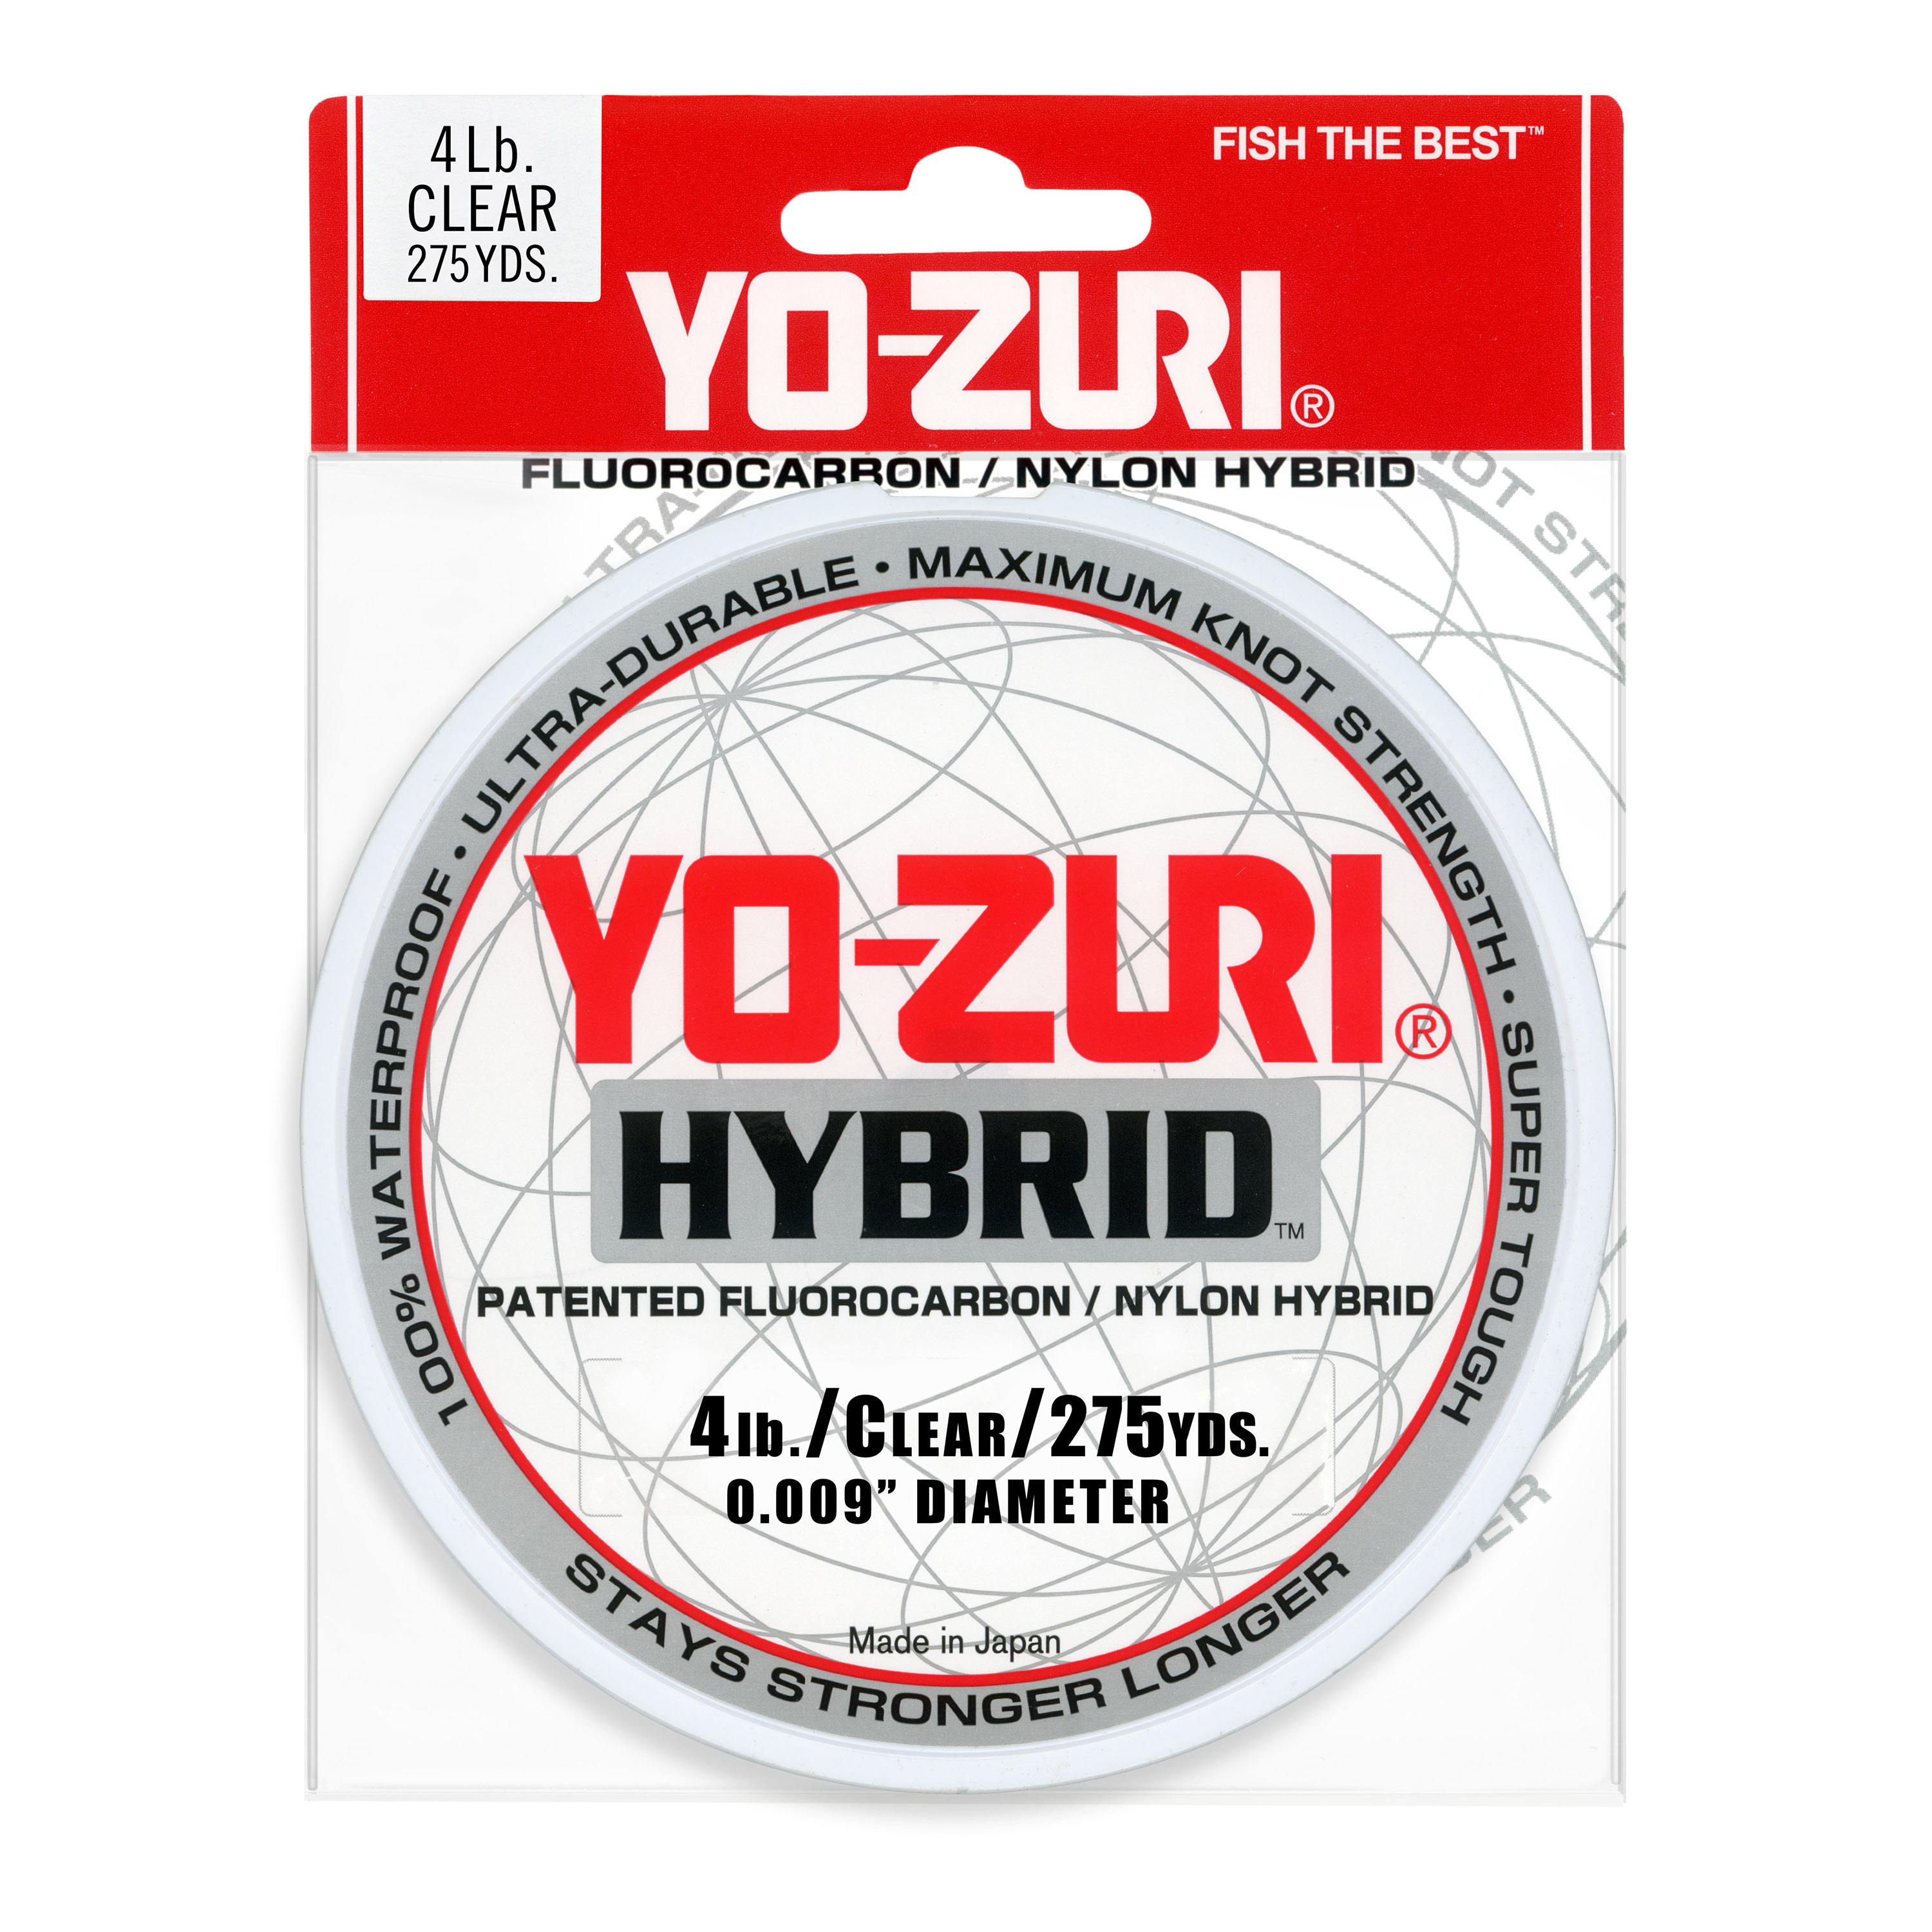 Yo-Zuri Fluorocarbon Nylon Hybrid Fishing Line - 6 LB Test - 600